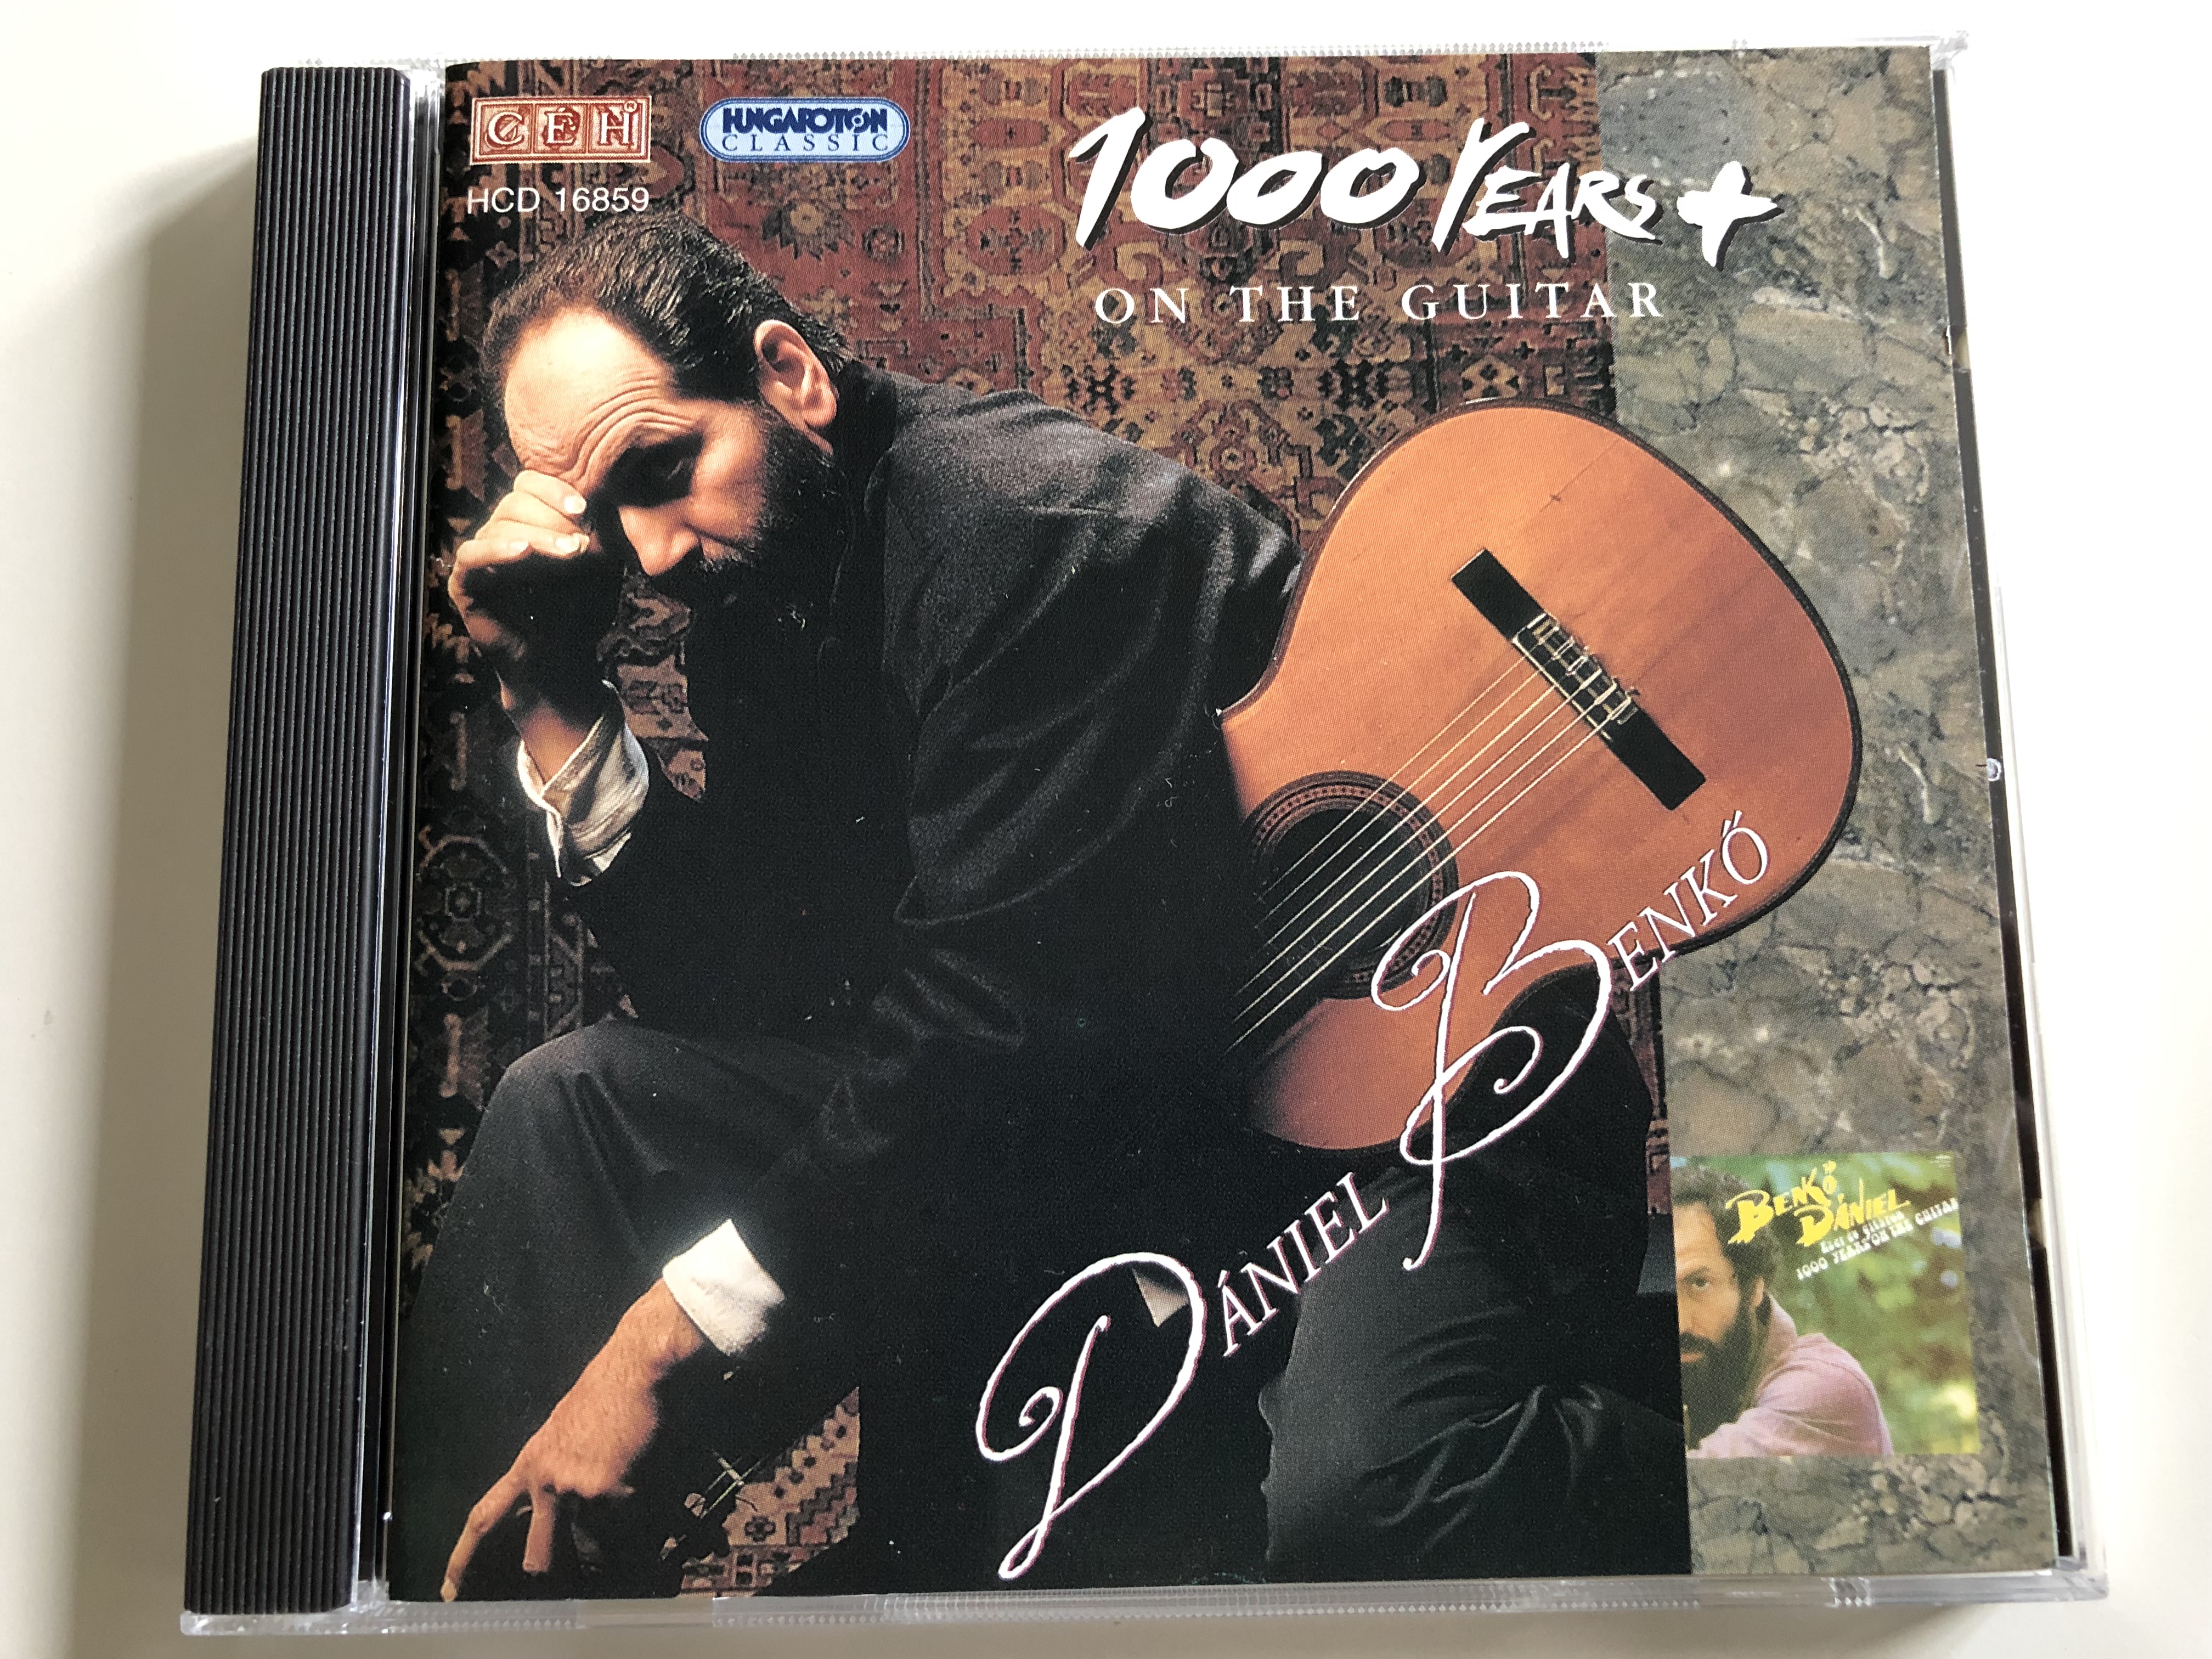 d-niel-benk-1000-years-on-the-guitar-hungaroton-classic-audio-cd-2000-hcd-16859-1-.jpg